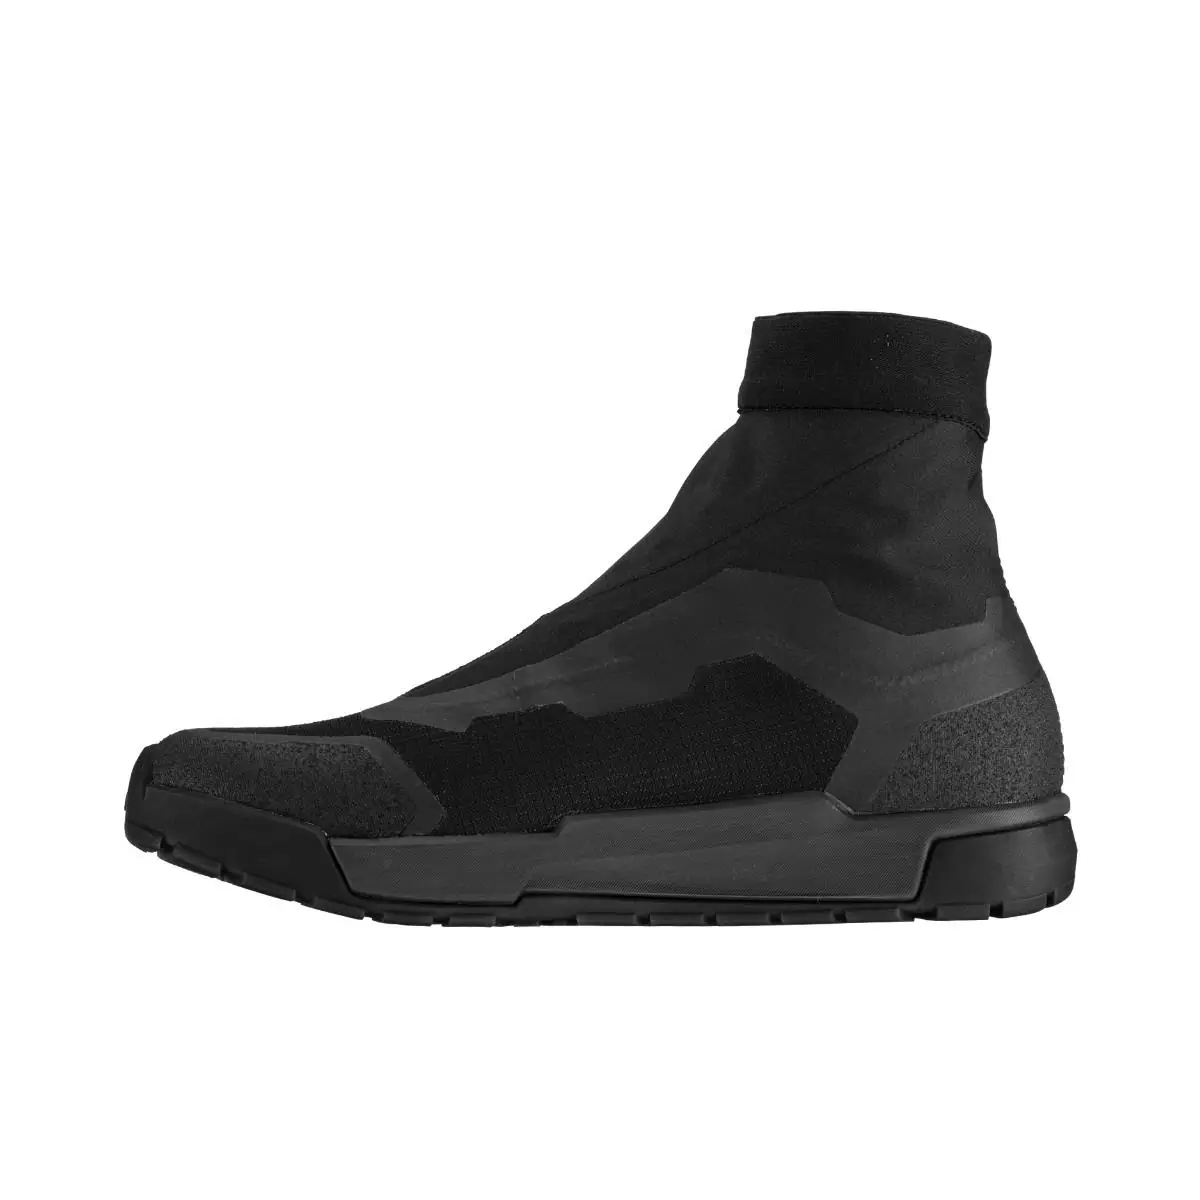 Waterproof Shoes MTB 7.0 HydraDri Flat Black Size 43.5 #5